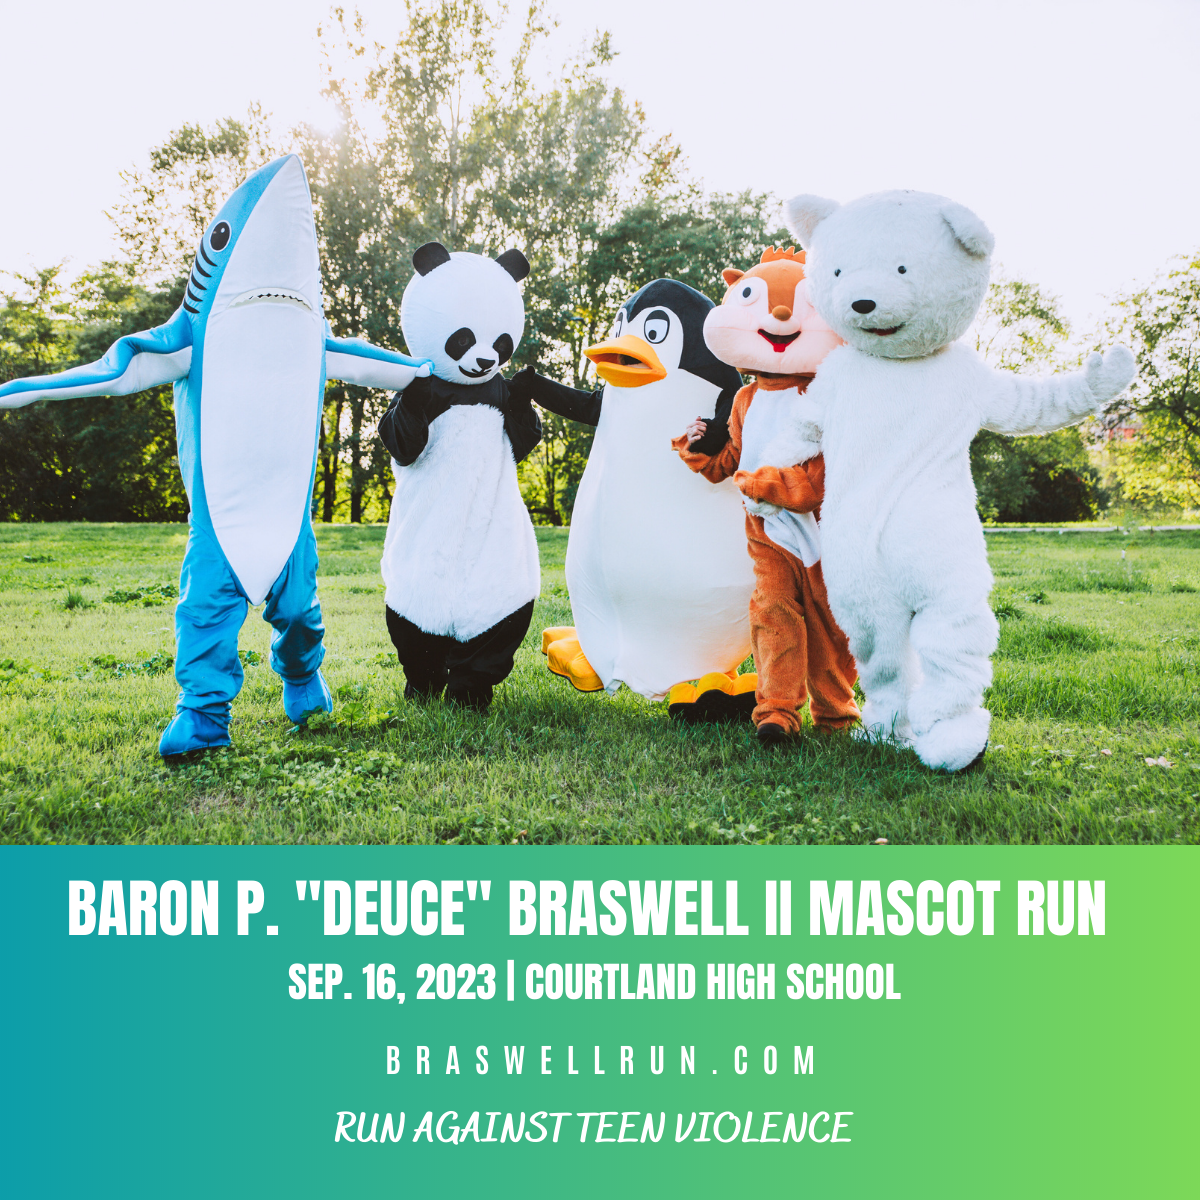 Baron P. Deuce Braswell Mascot Run Details